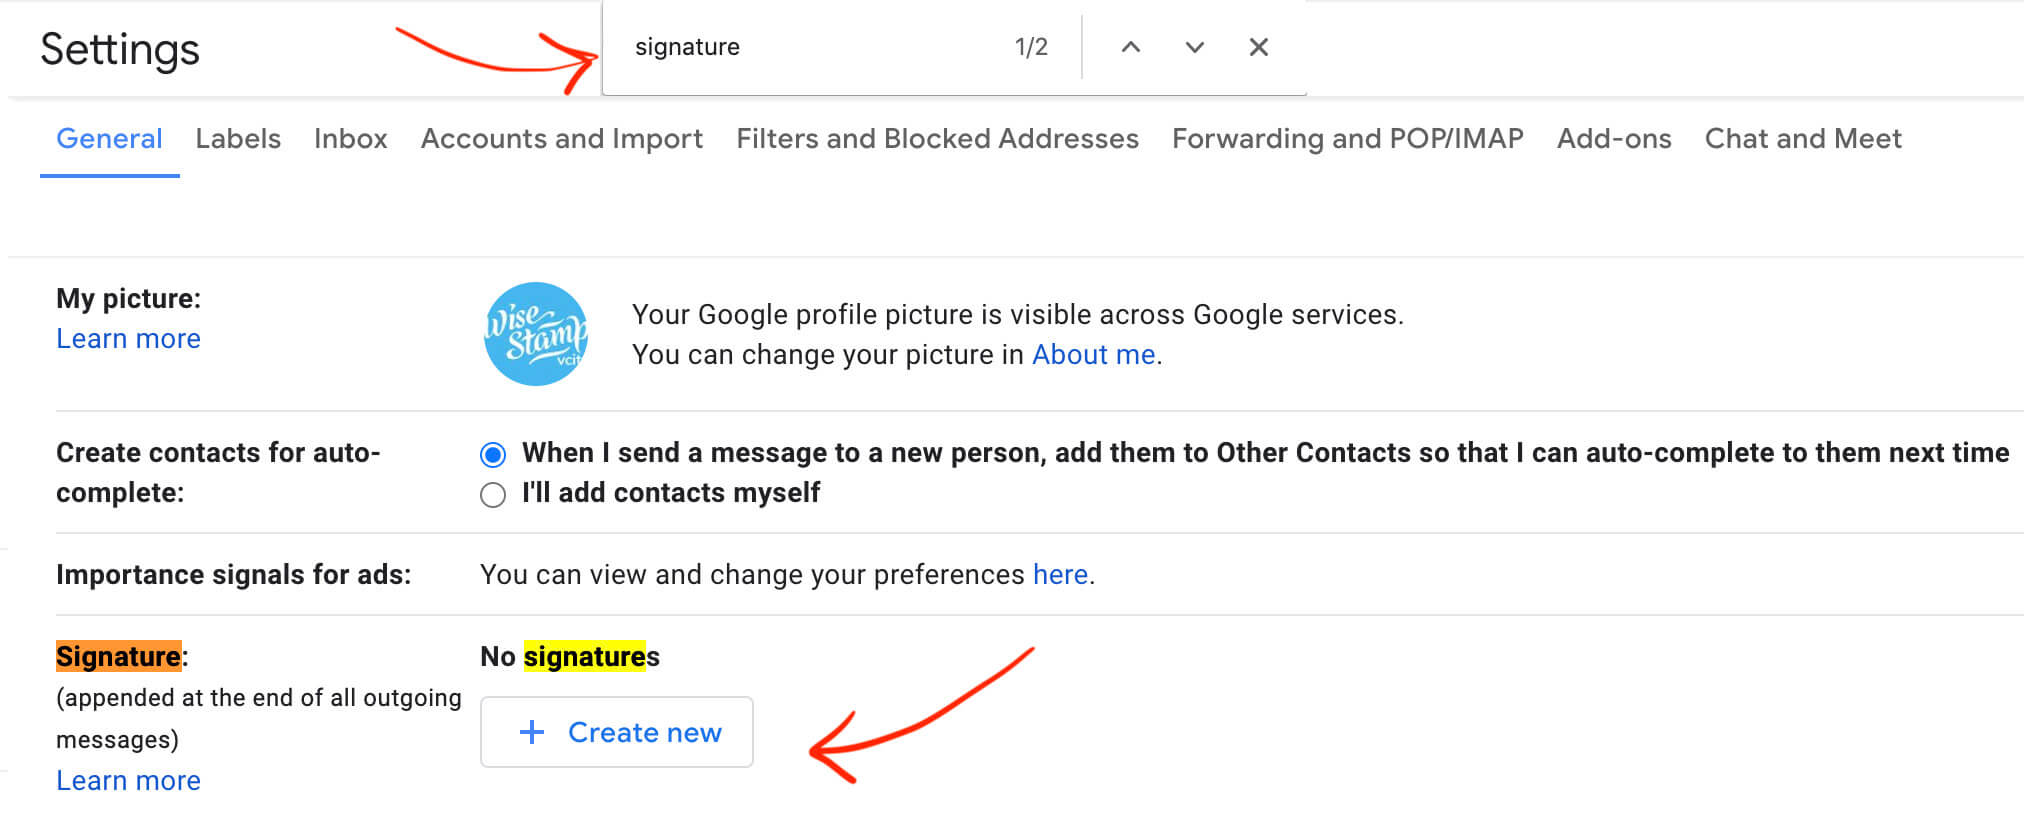 Add email signature in Gmail - Step 2 - Add new Gmail signature